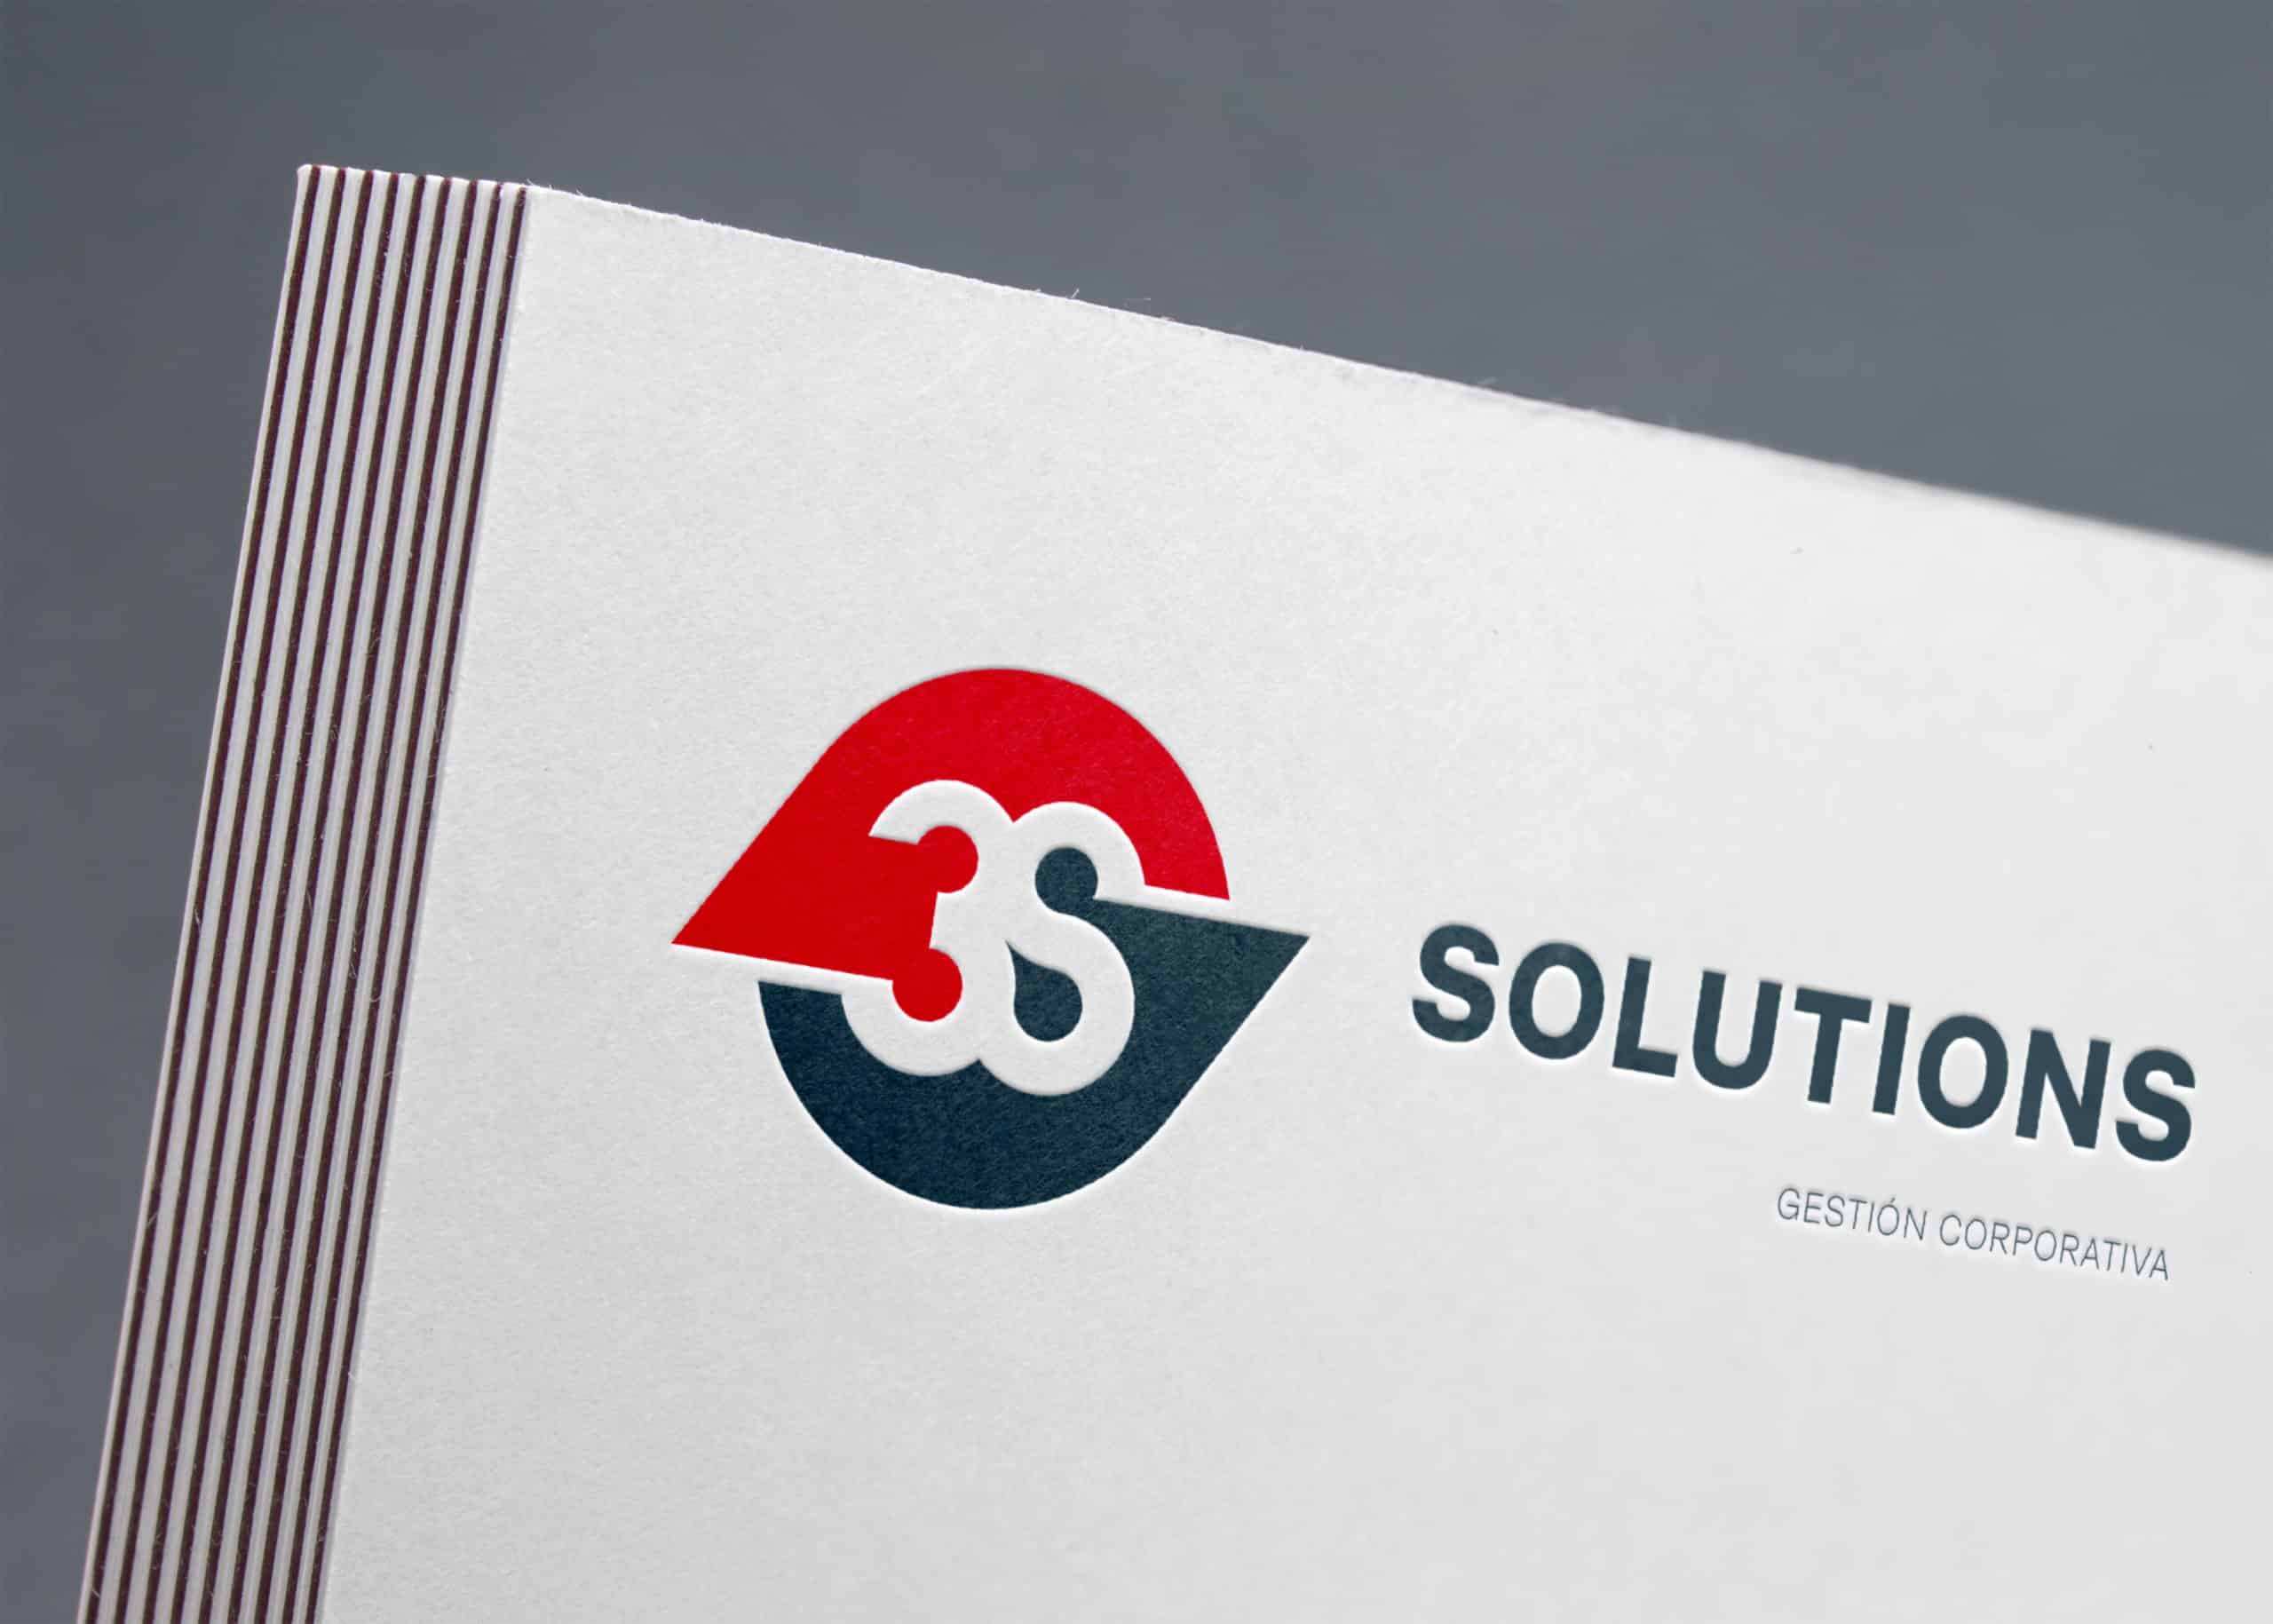 001-3S-Solutions-Logo